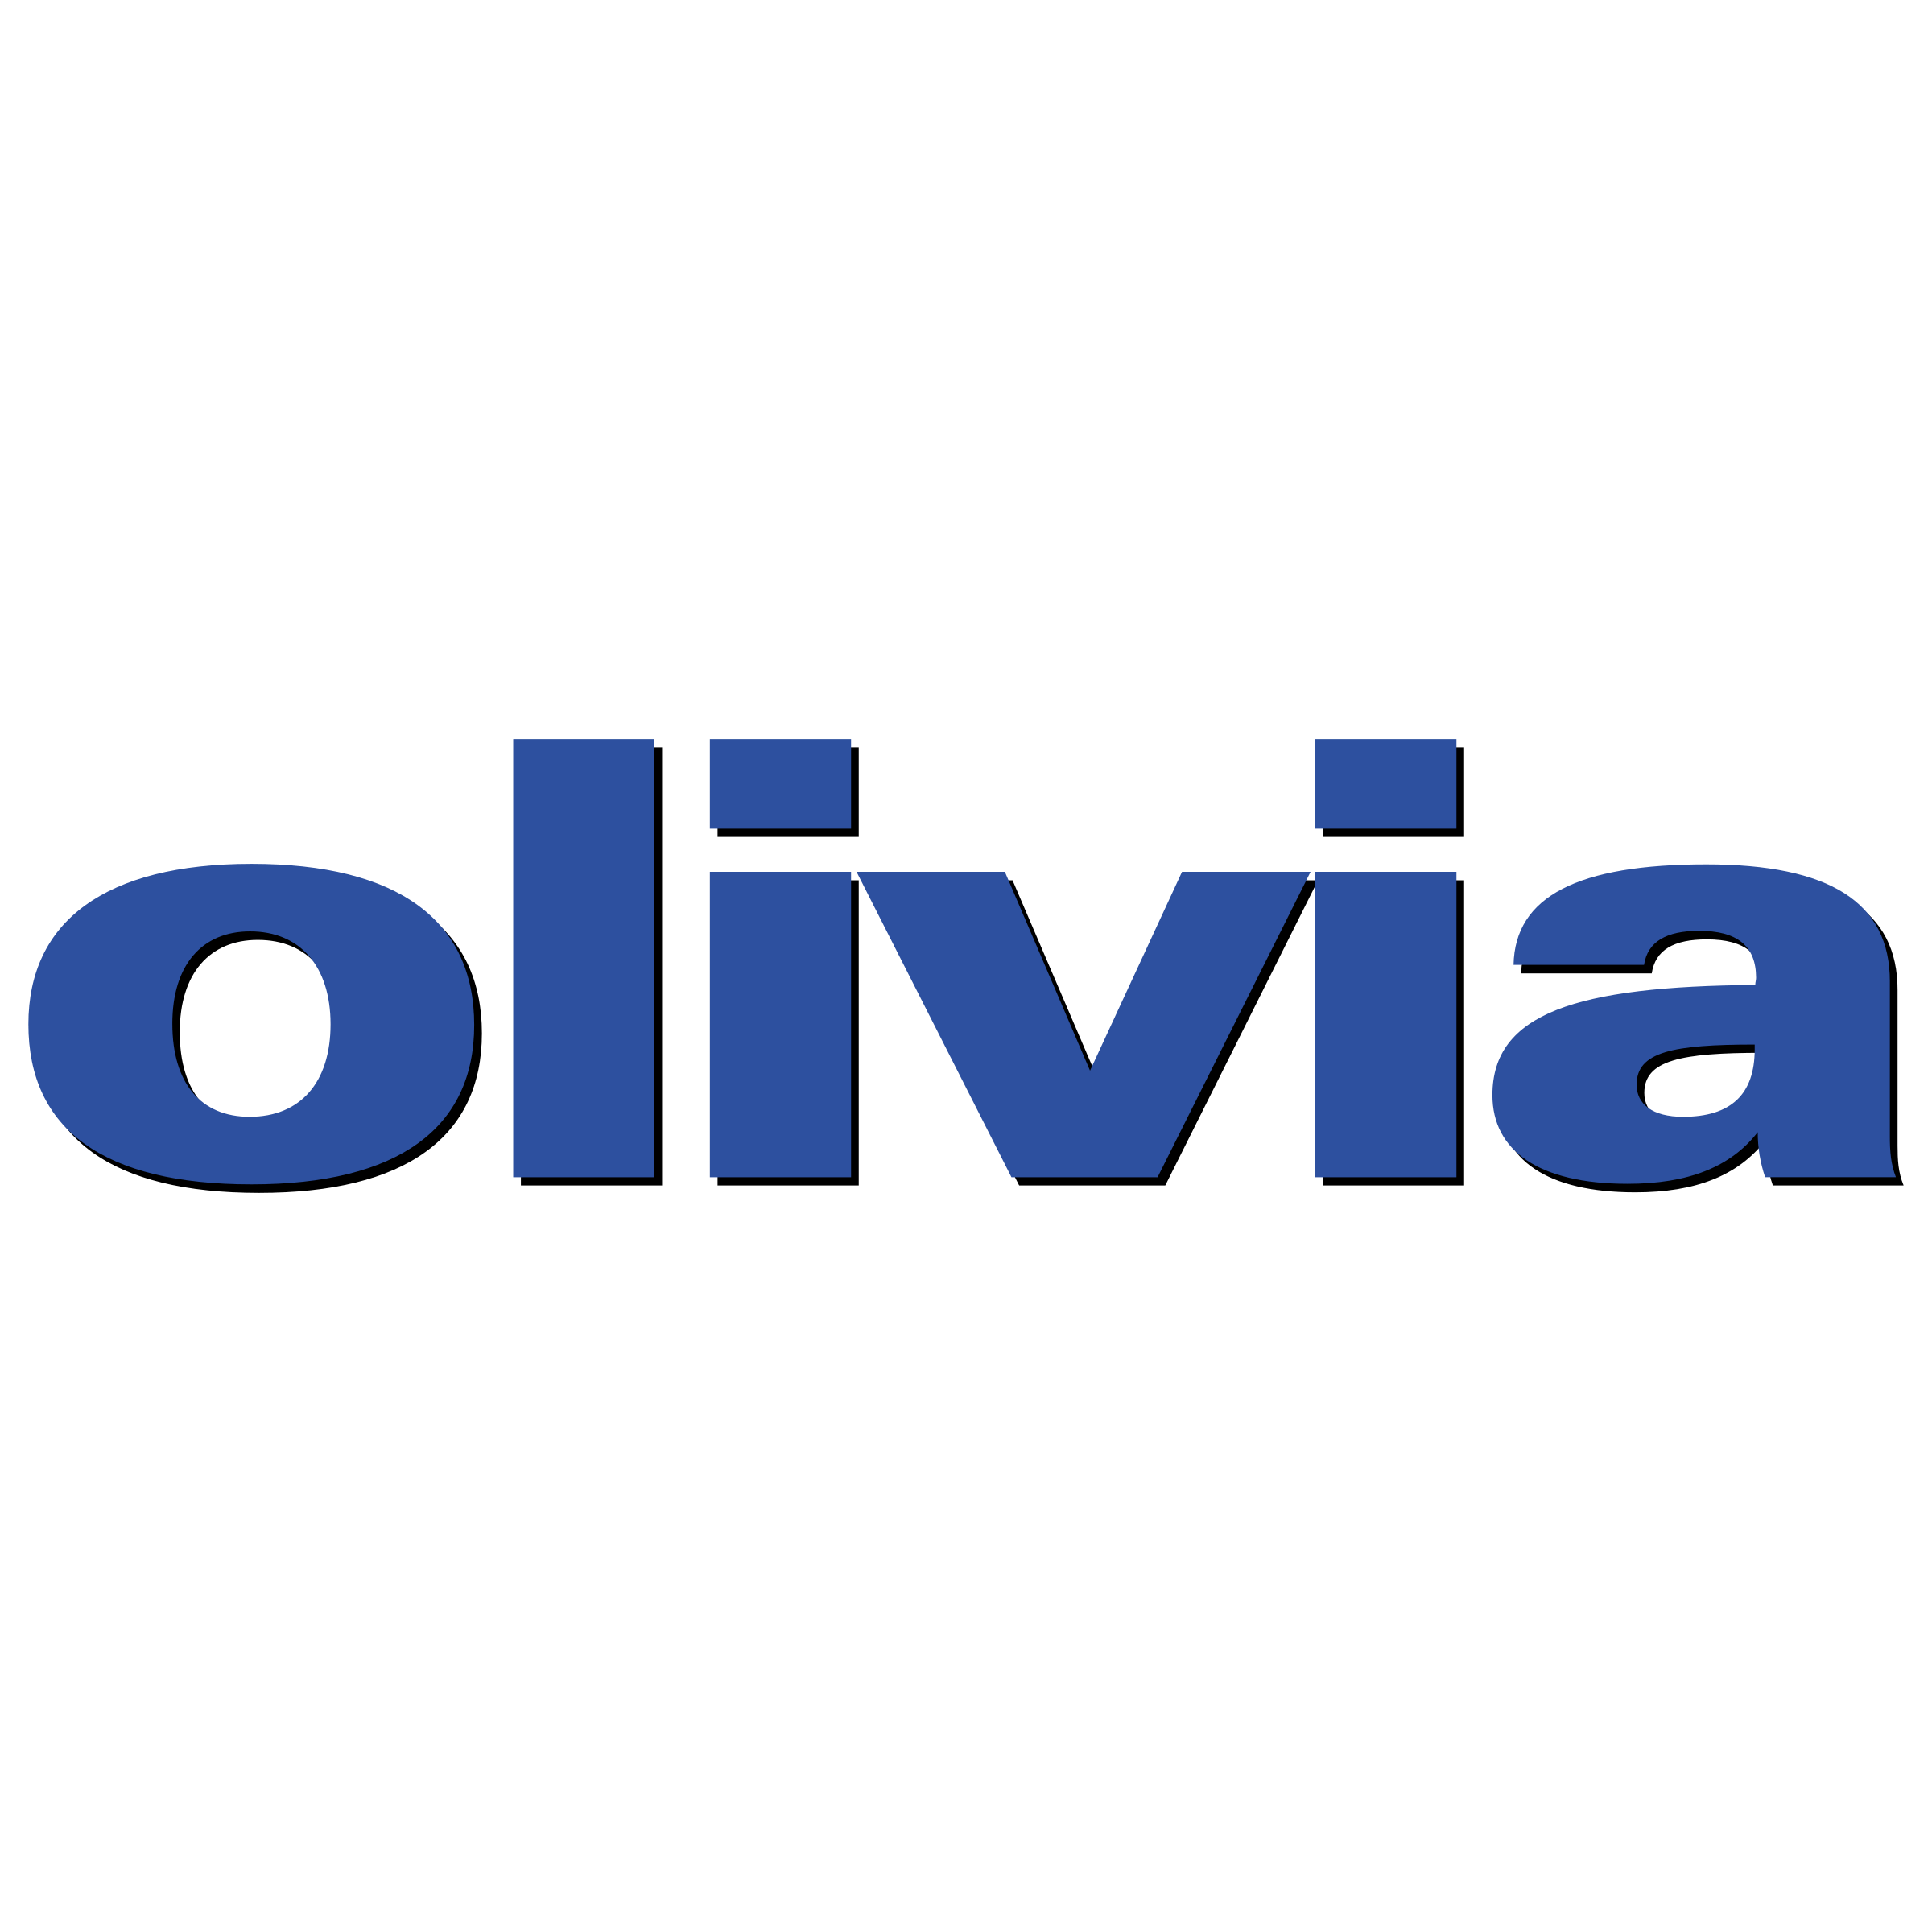 Olivia Logo - Olivia Logo PNG Transparent & SVG Vector - Freebie Supply